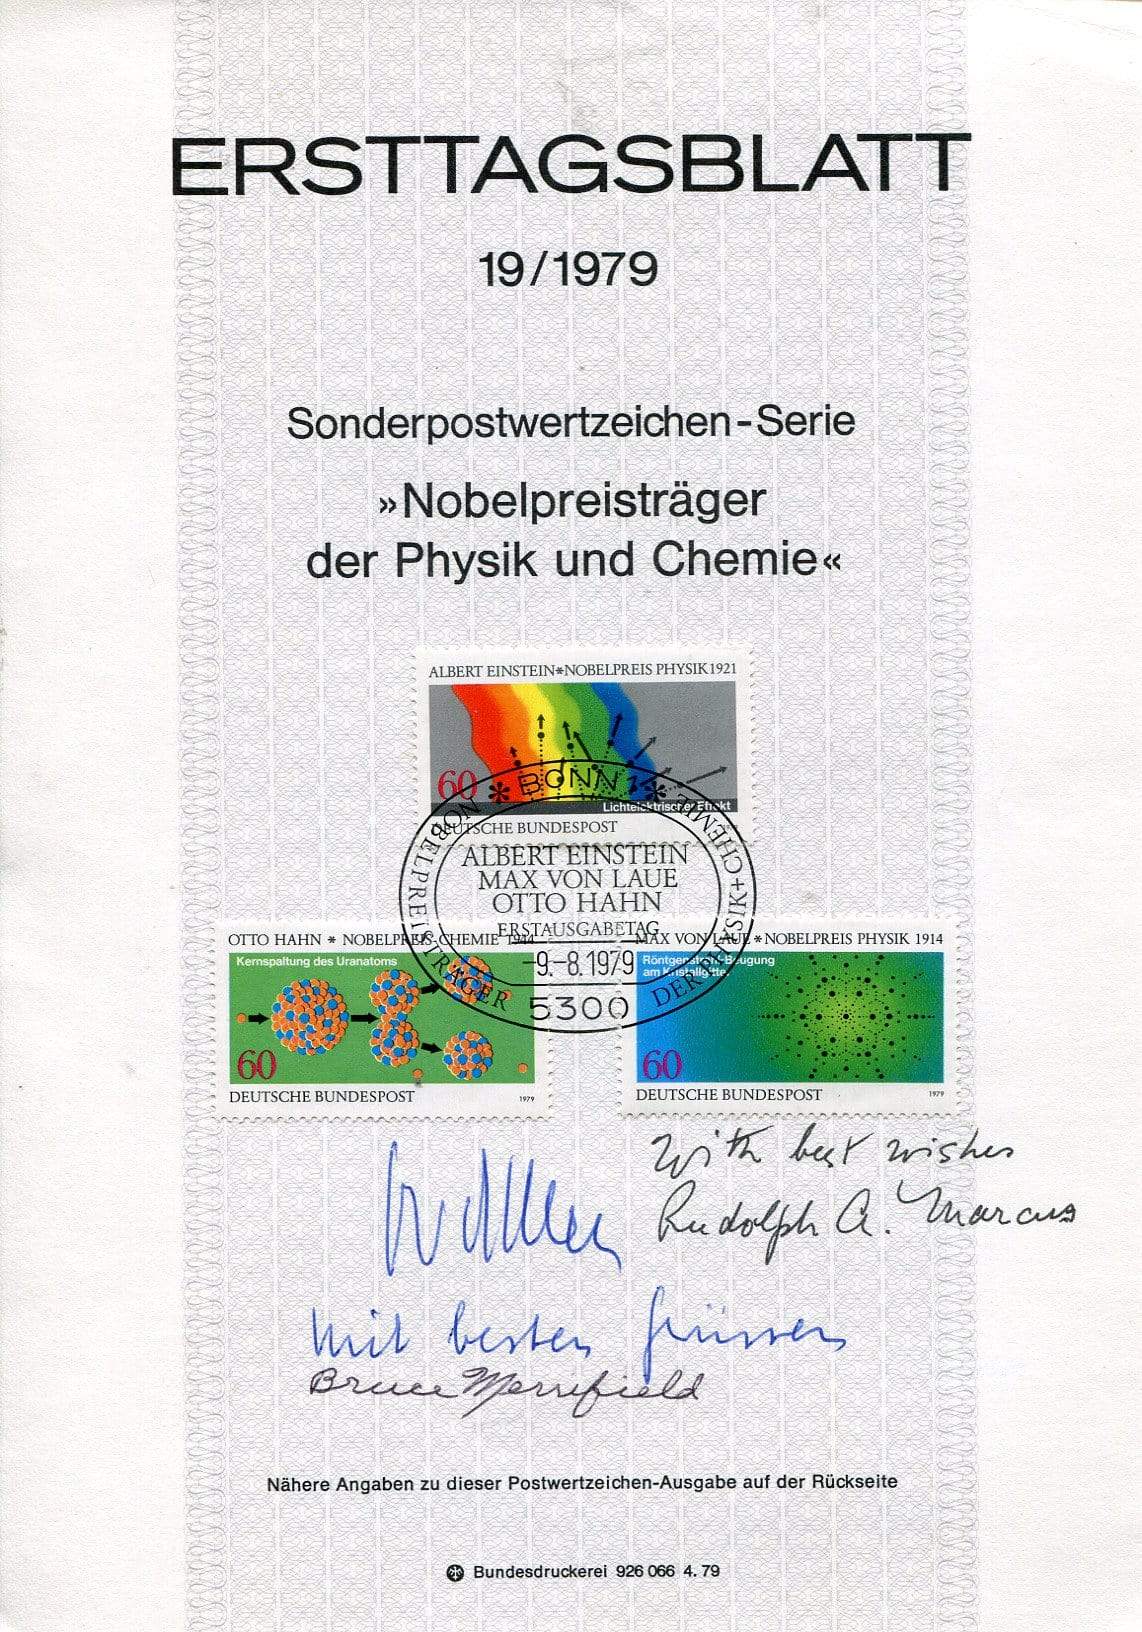 Simon &amp; Rudolph &amp; Bruce Van der Meer &amp; Marcus &amp; Merrifield Autograph Autogramm | ID 7186608423061